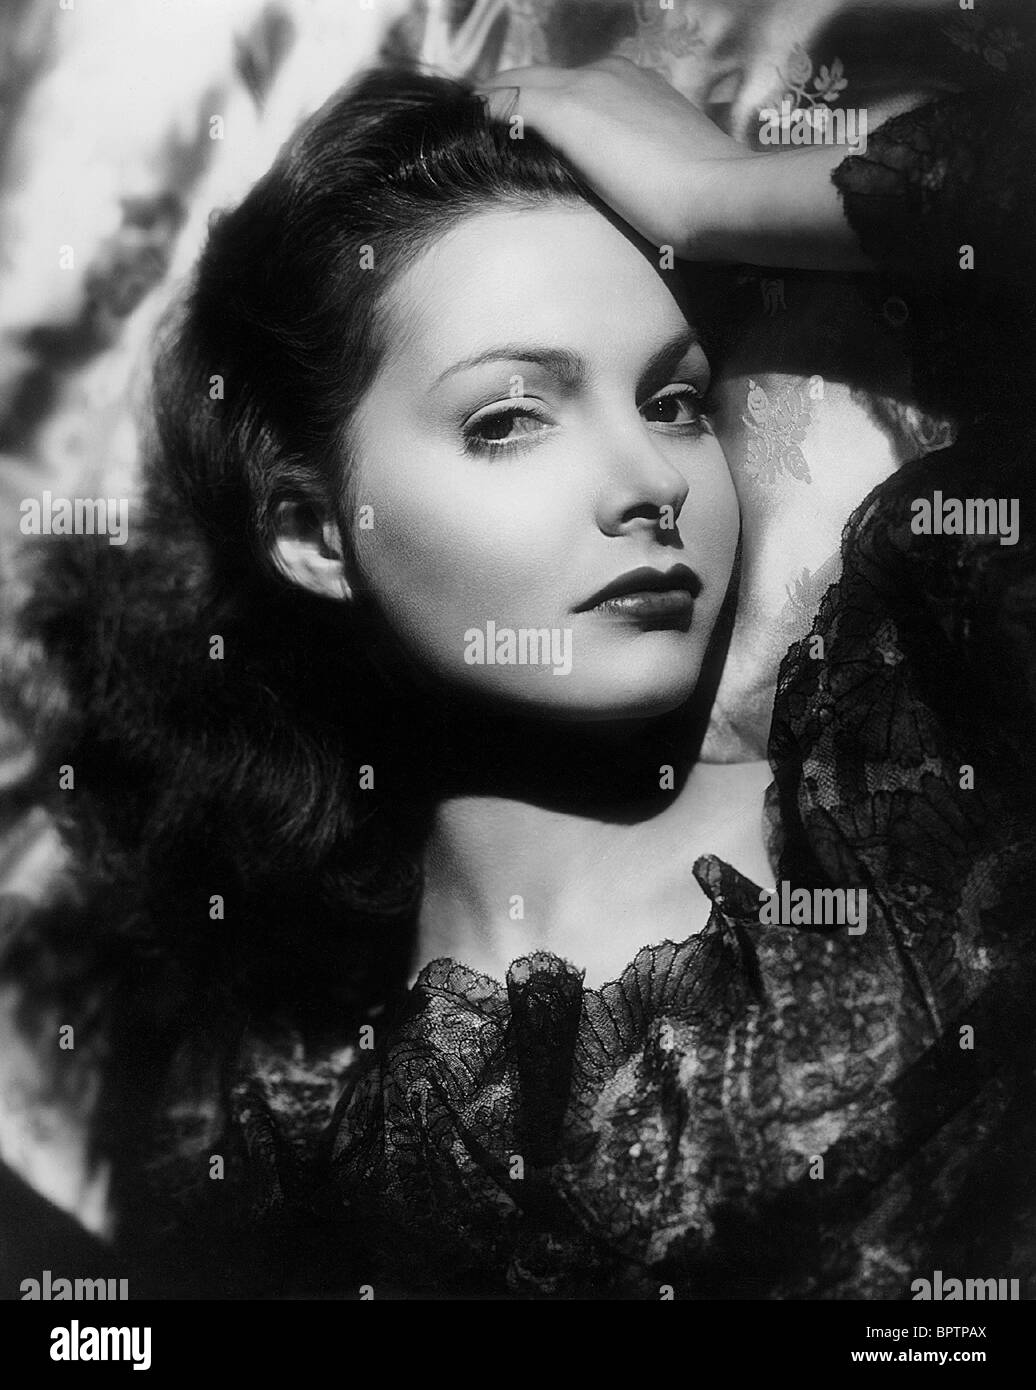 <b>ELIZABETH SELLERS</b> ACTRESS (1952) Stock Photo - elizabeth-sellers-actress-1952-BPTPAX